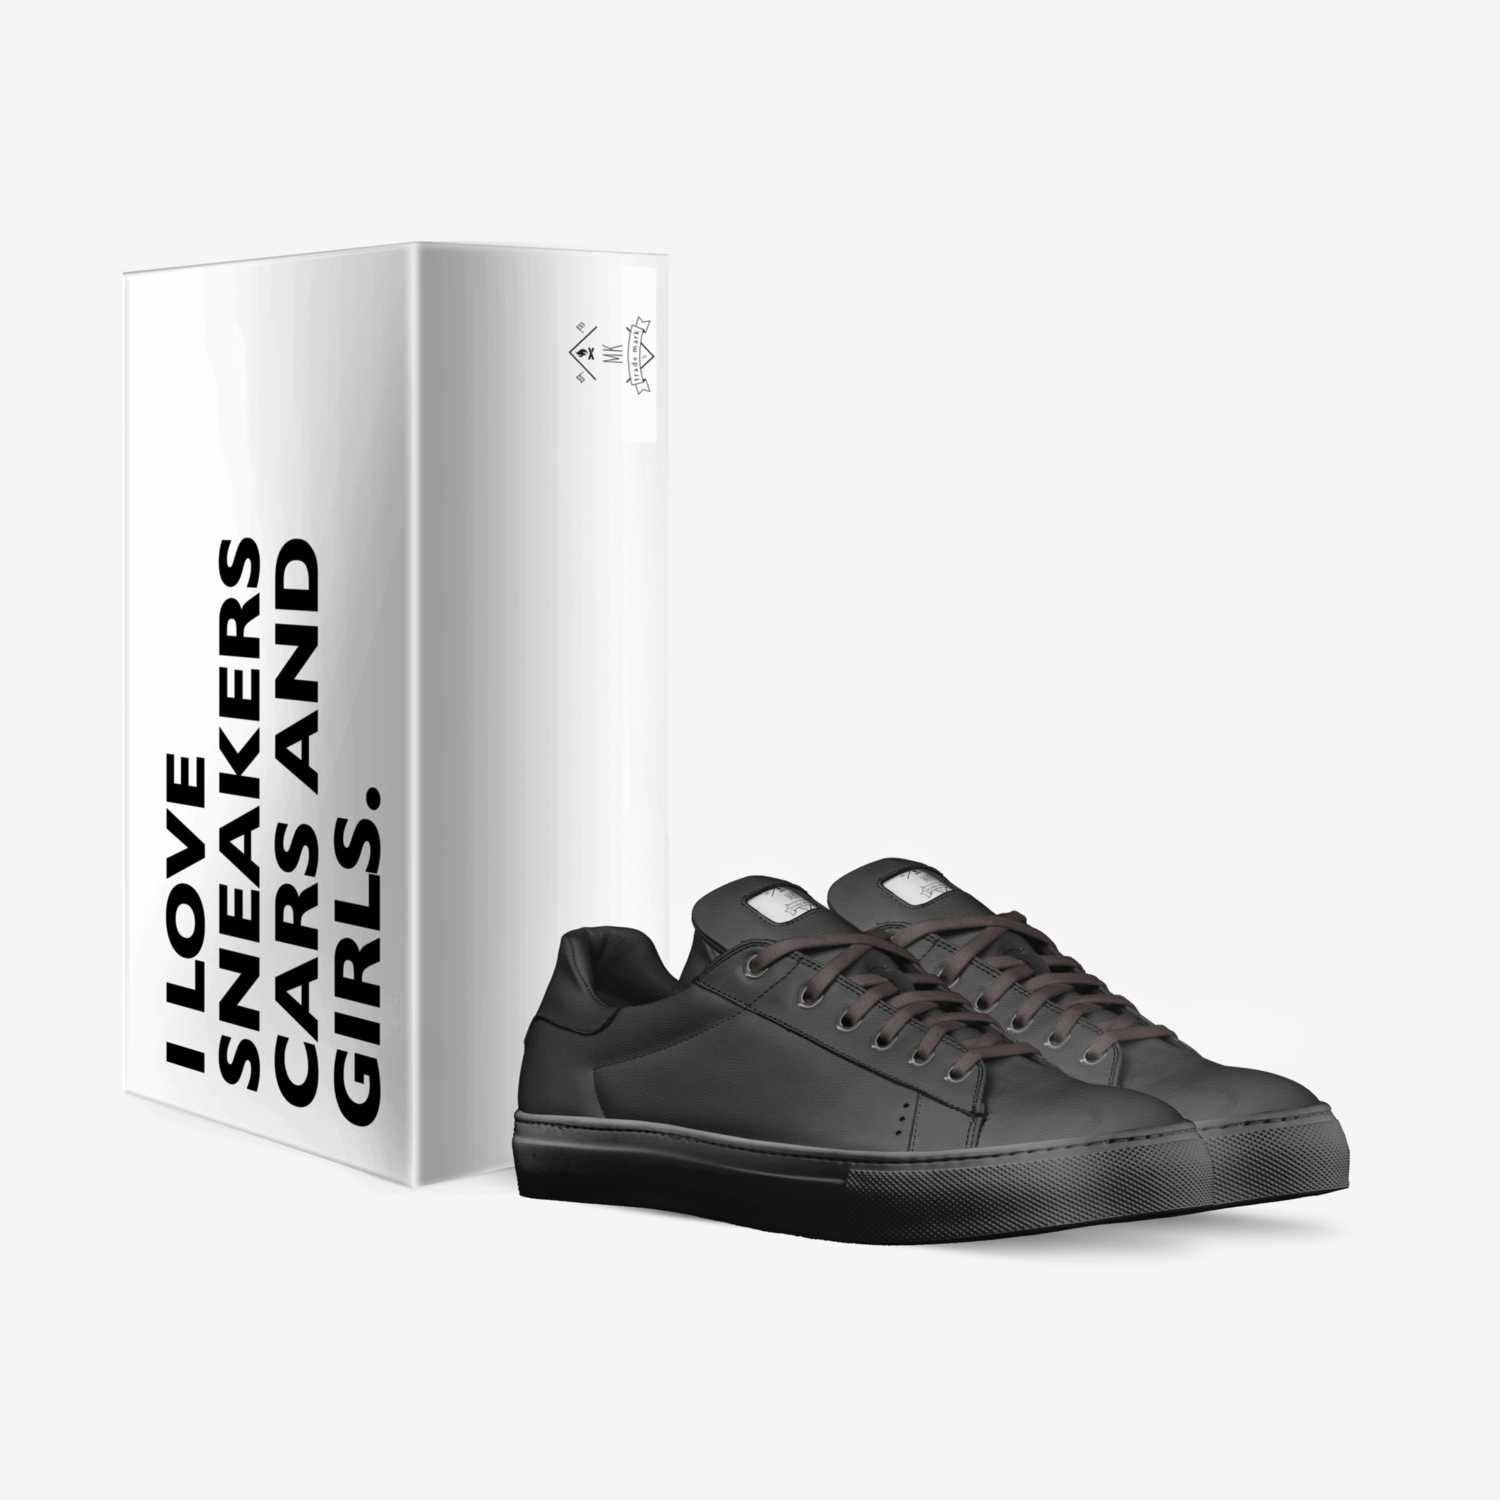 MK custom made in Italy shoes by Kutijevac Marko | Box view